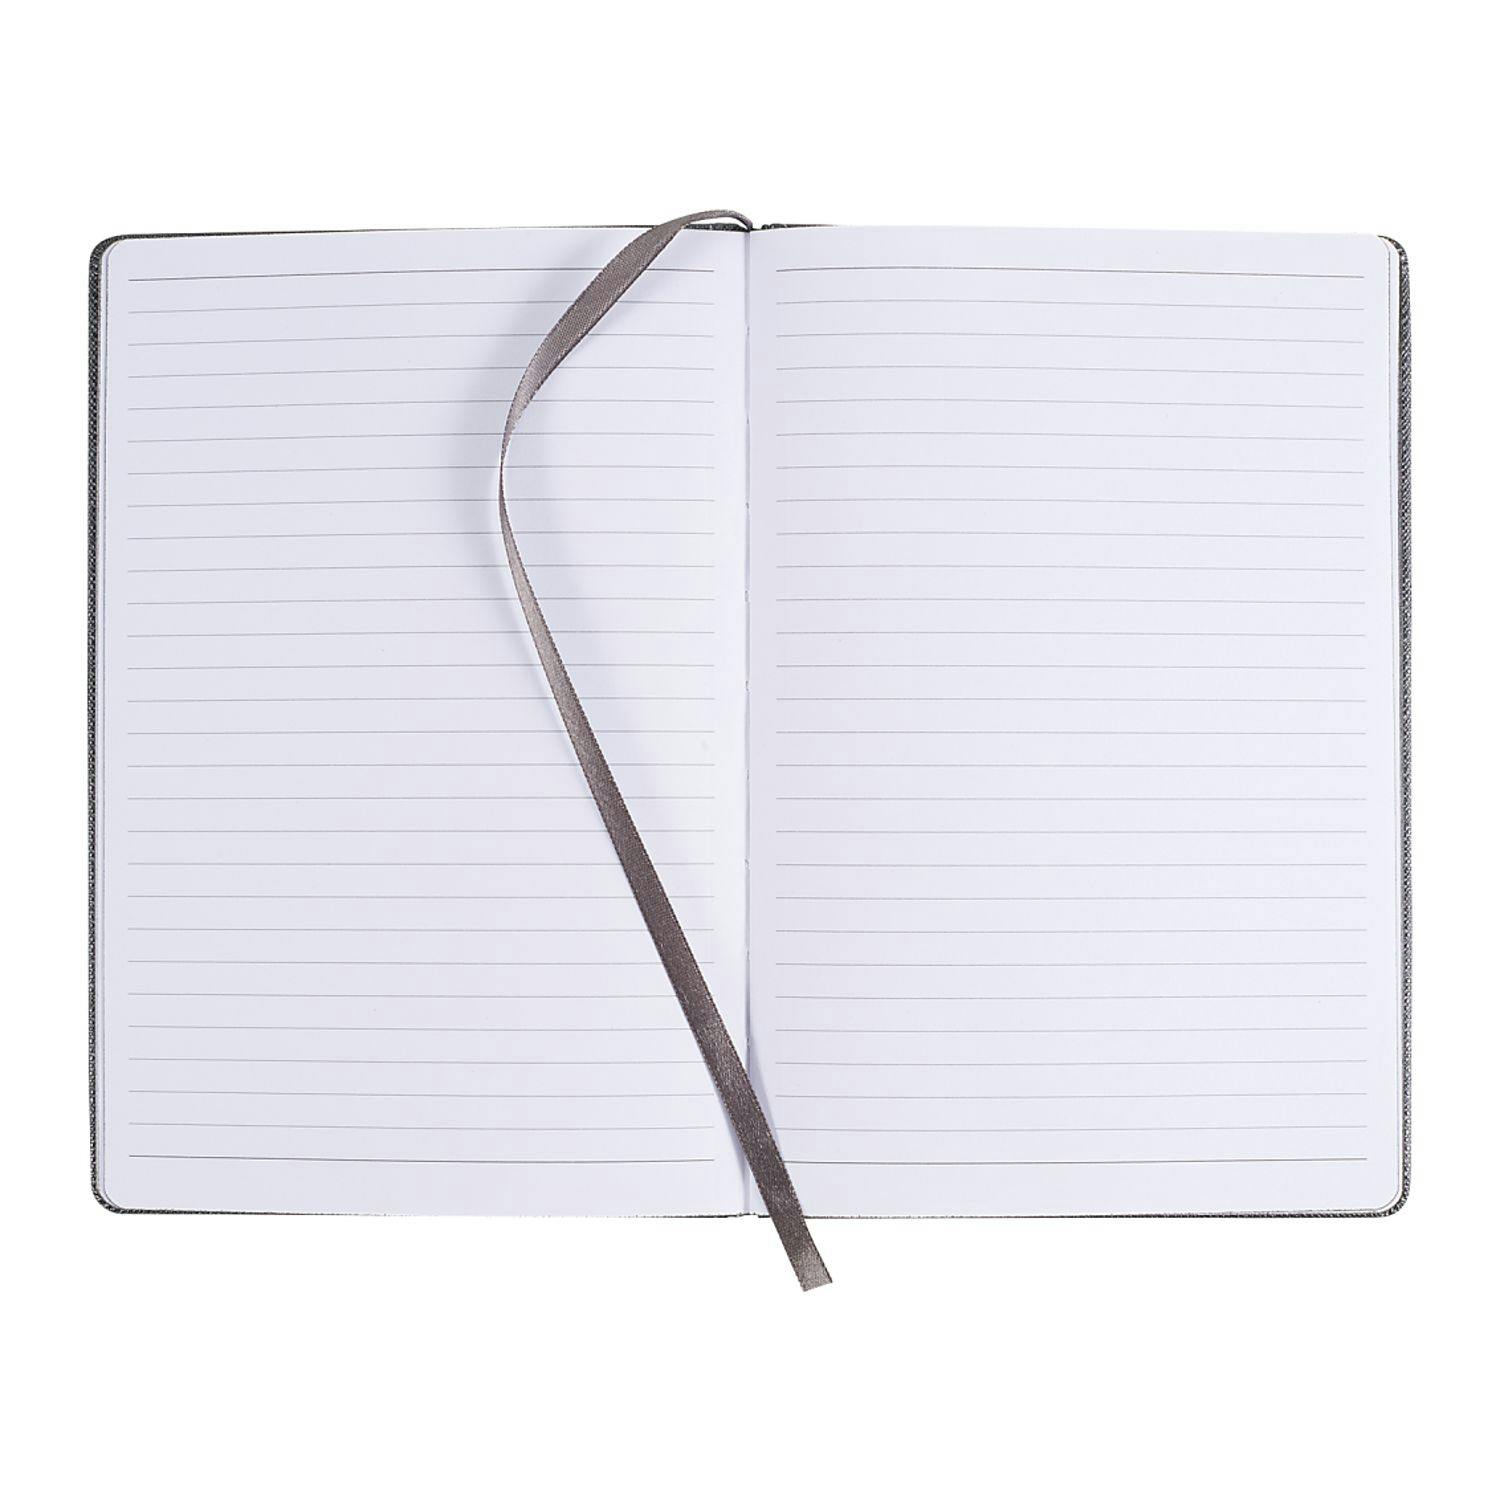 5.5"x 8.5" Modena Bound JournalBook® - additional Image 3